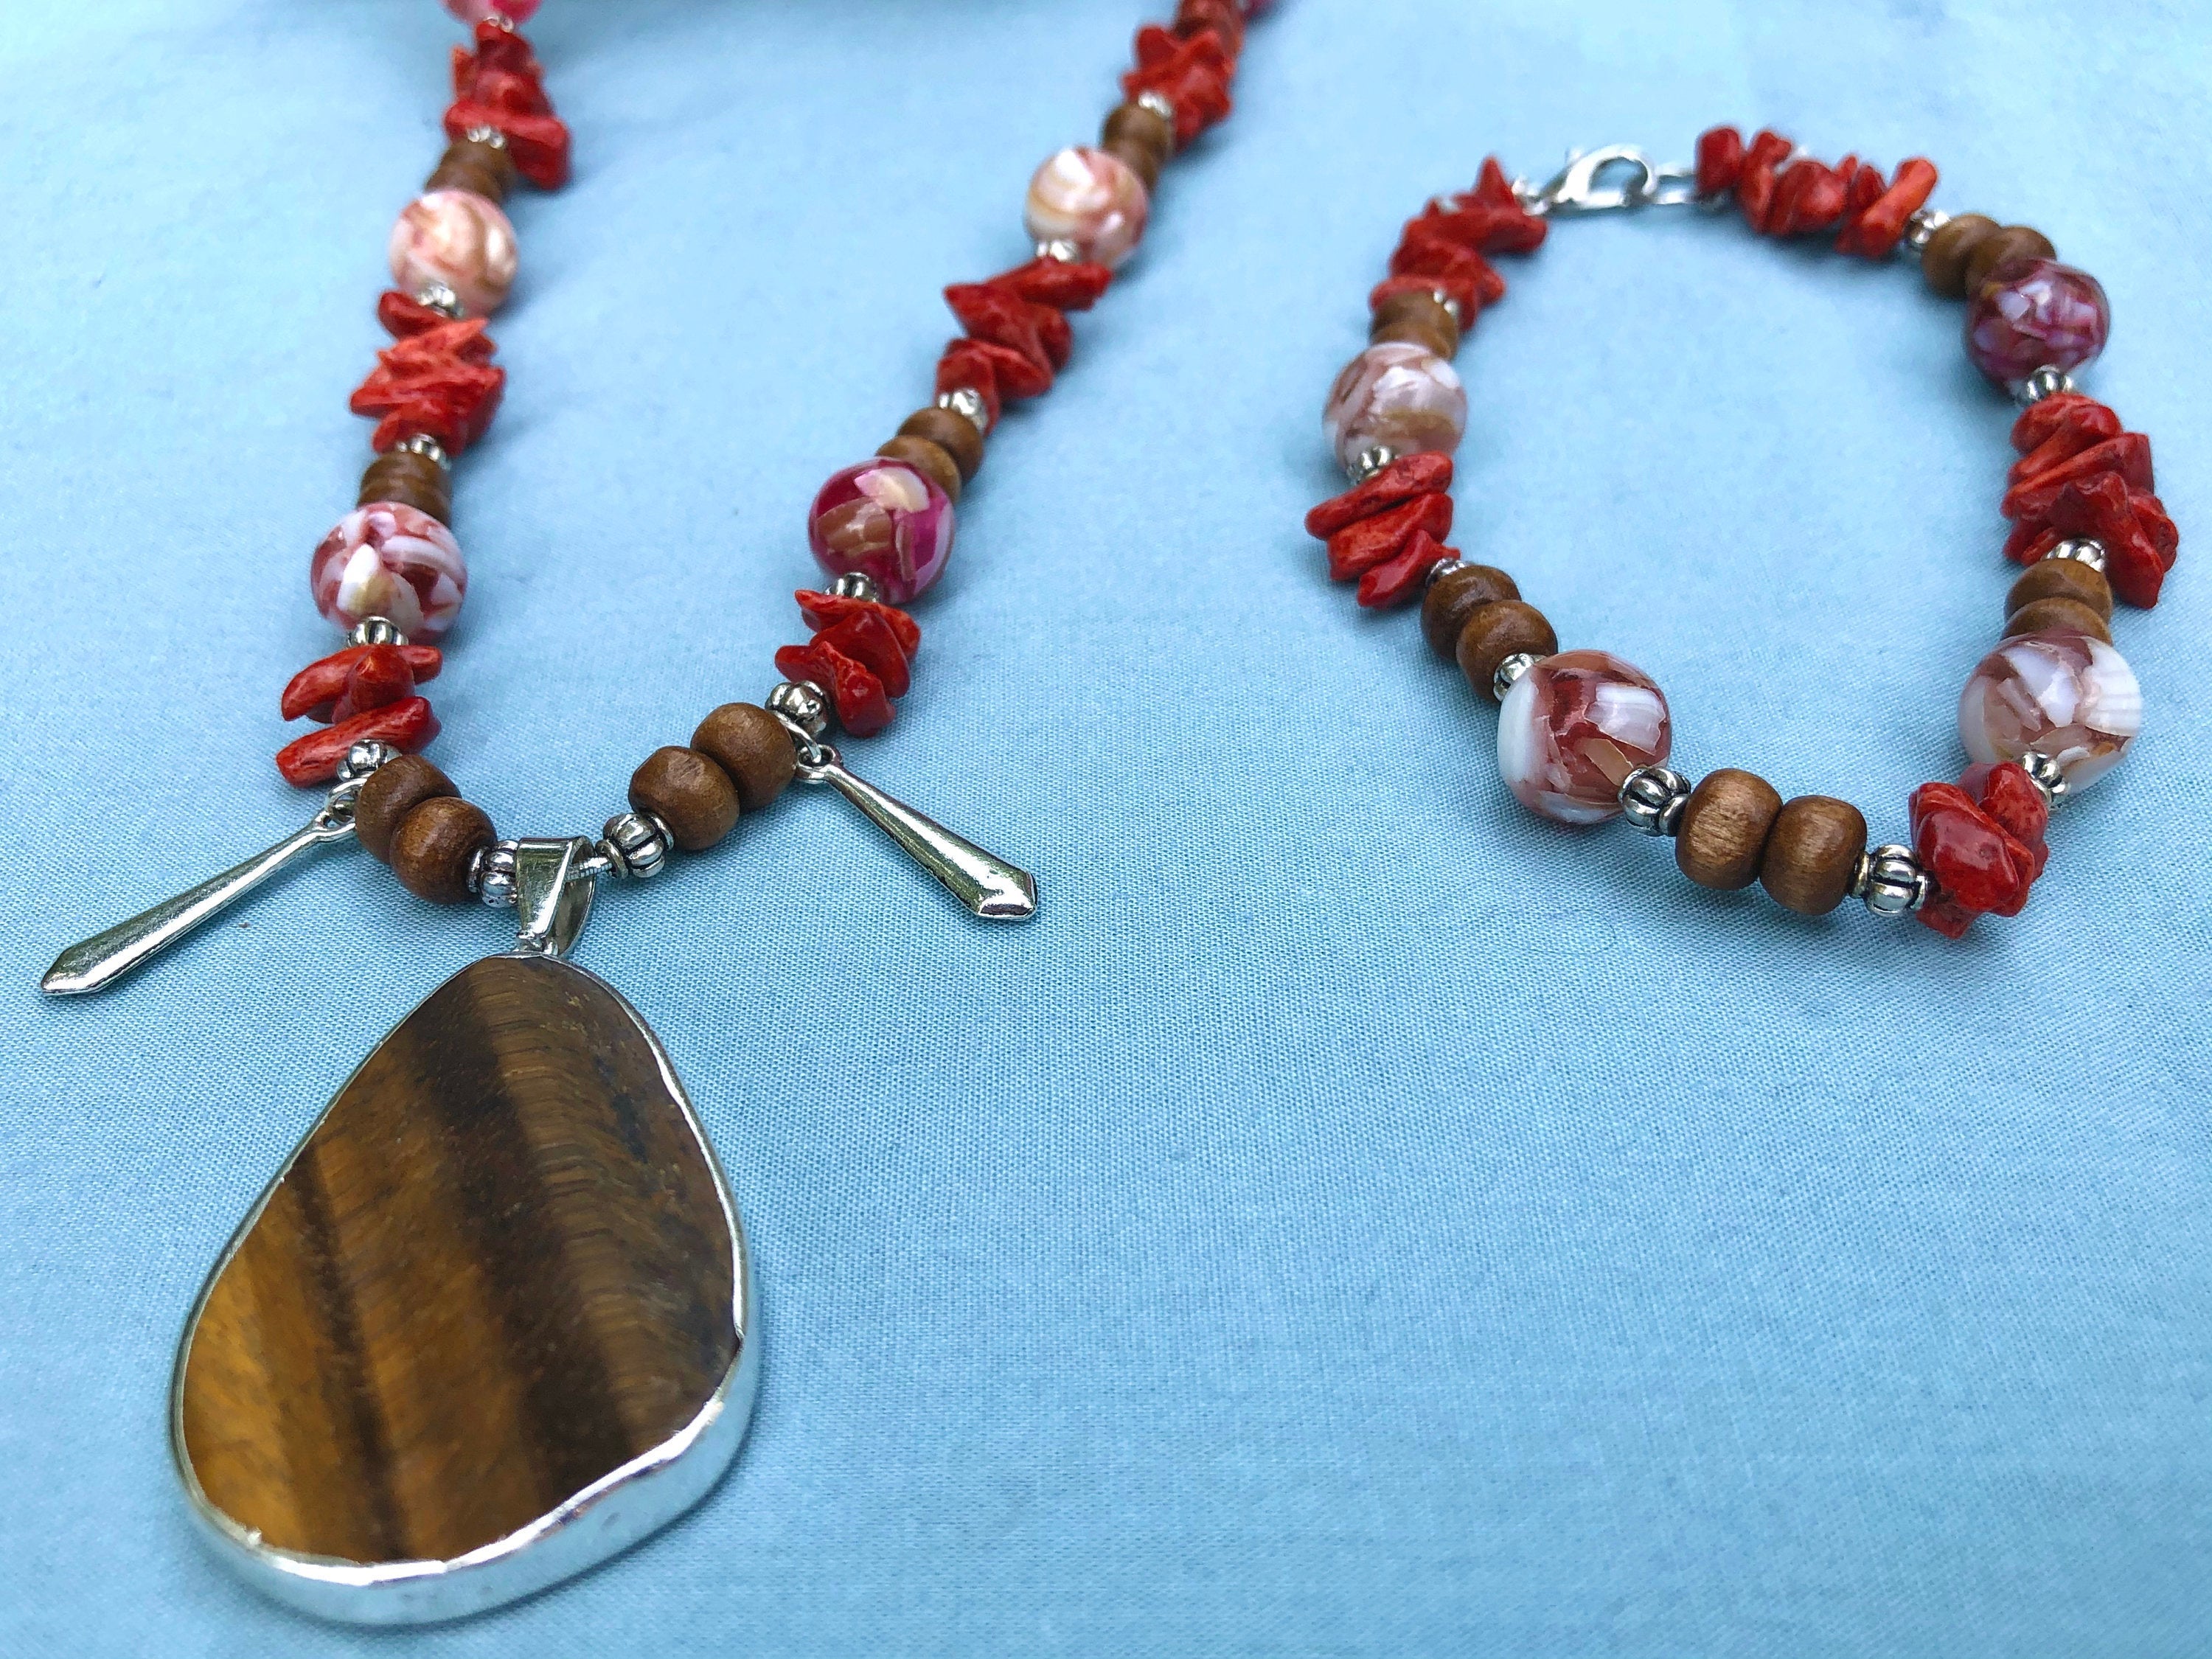 Chakra Healing "Goddess' Sight" Necklace & Bracelet | Tiger Eye Mother of Pearl Sponge Coral | Healing Energy Meditation Beach Jewelry - Mama’s Malas jewelry